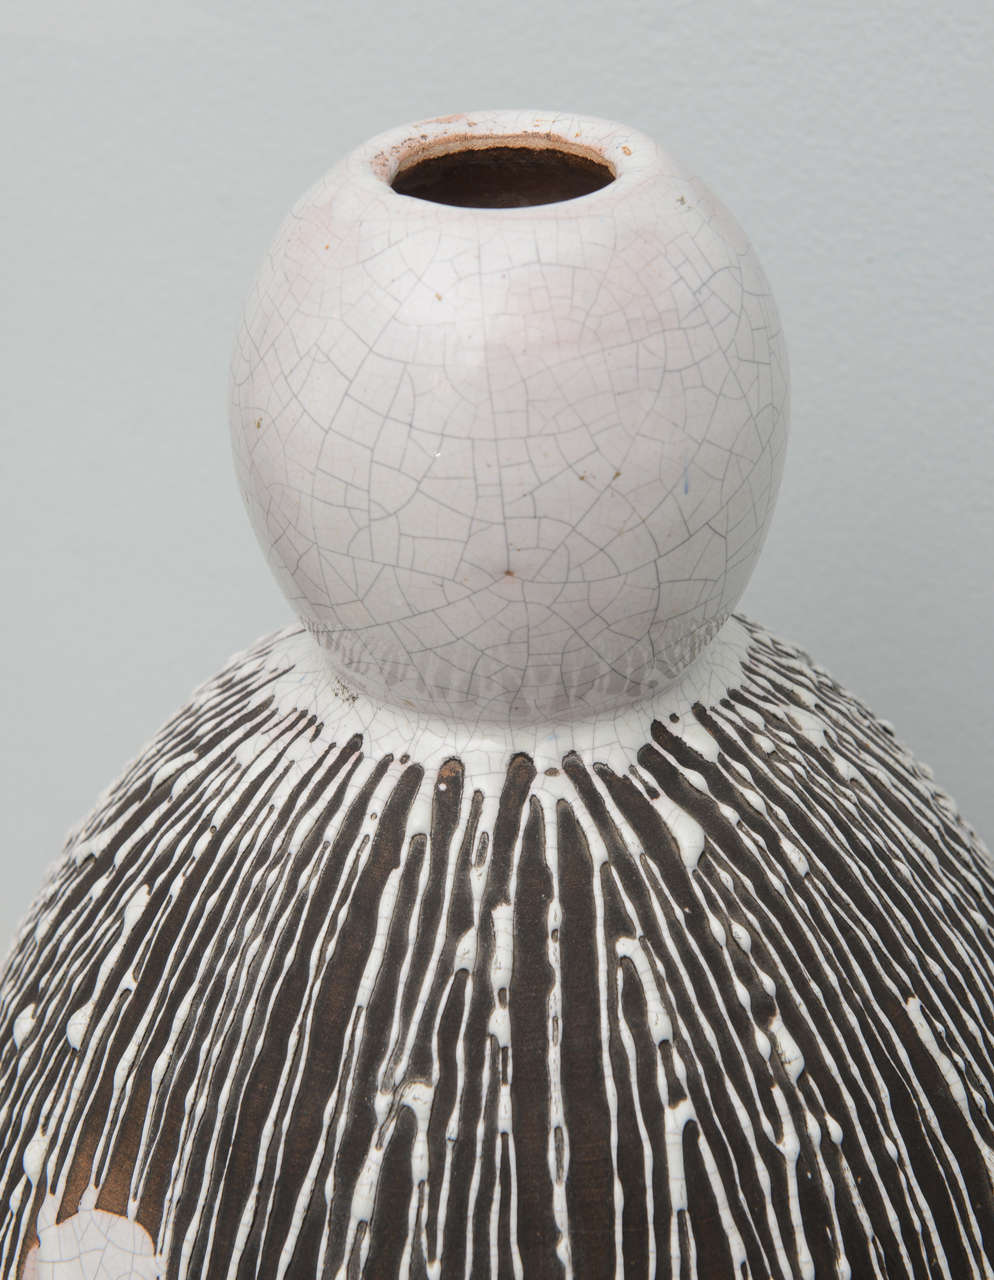 Mid-Century Modern A Primavera White, Brown and Black Glaze Vase